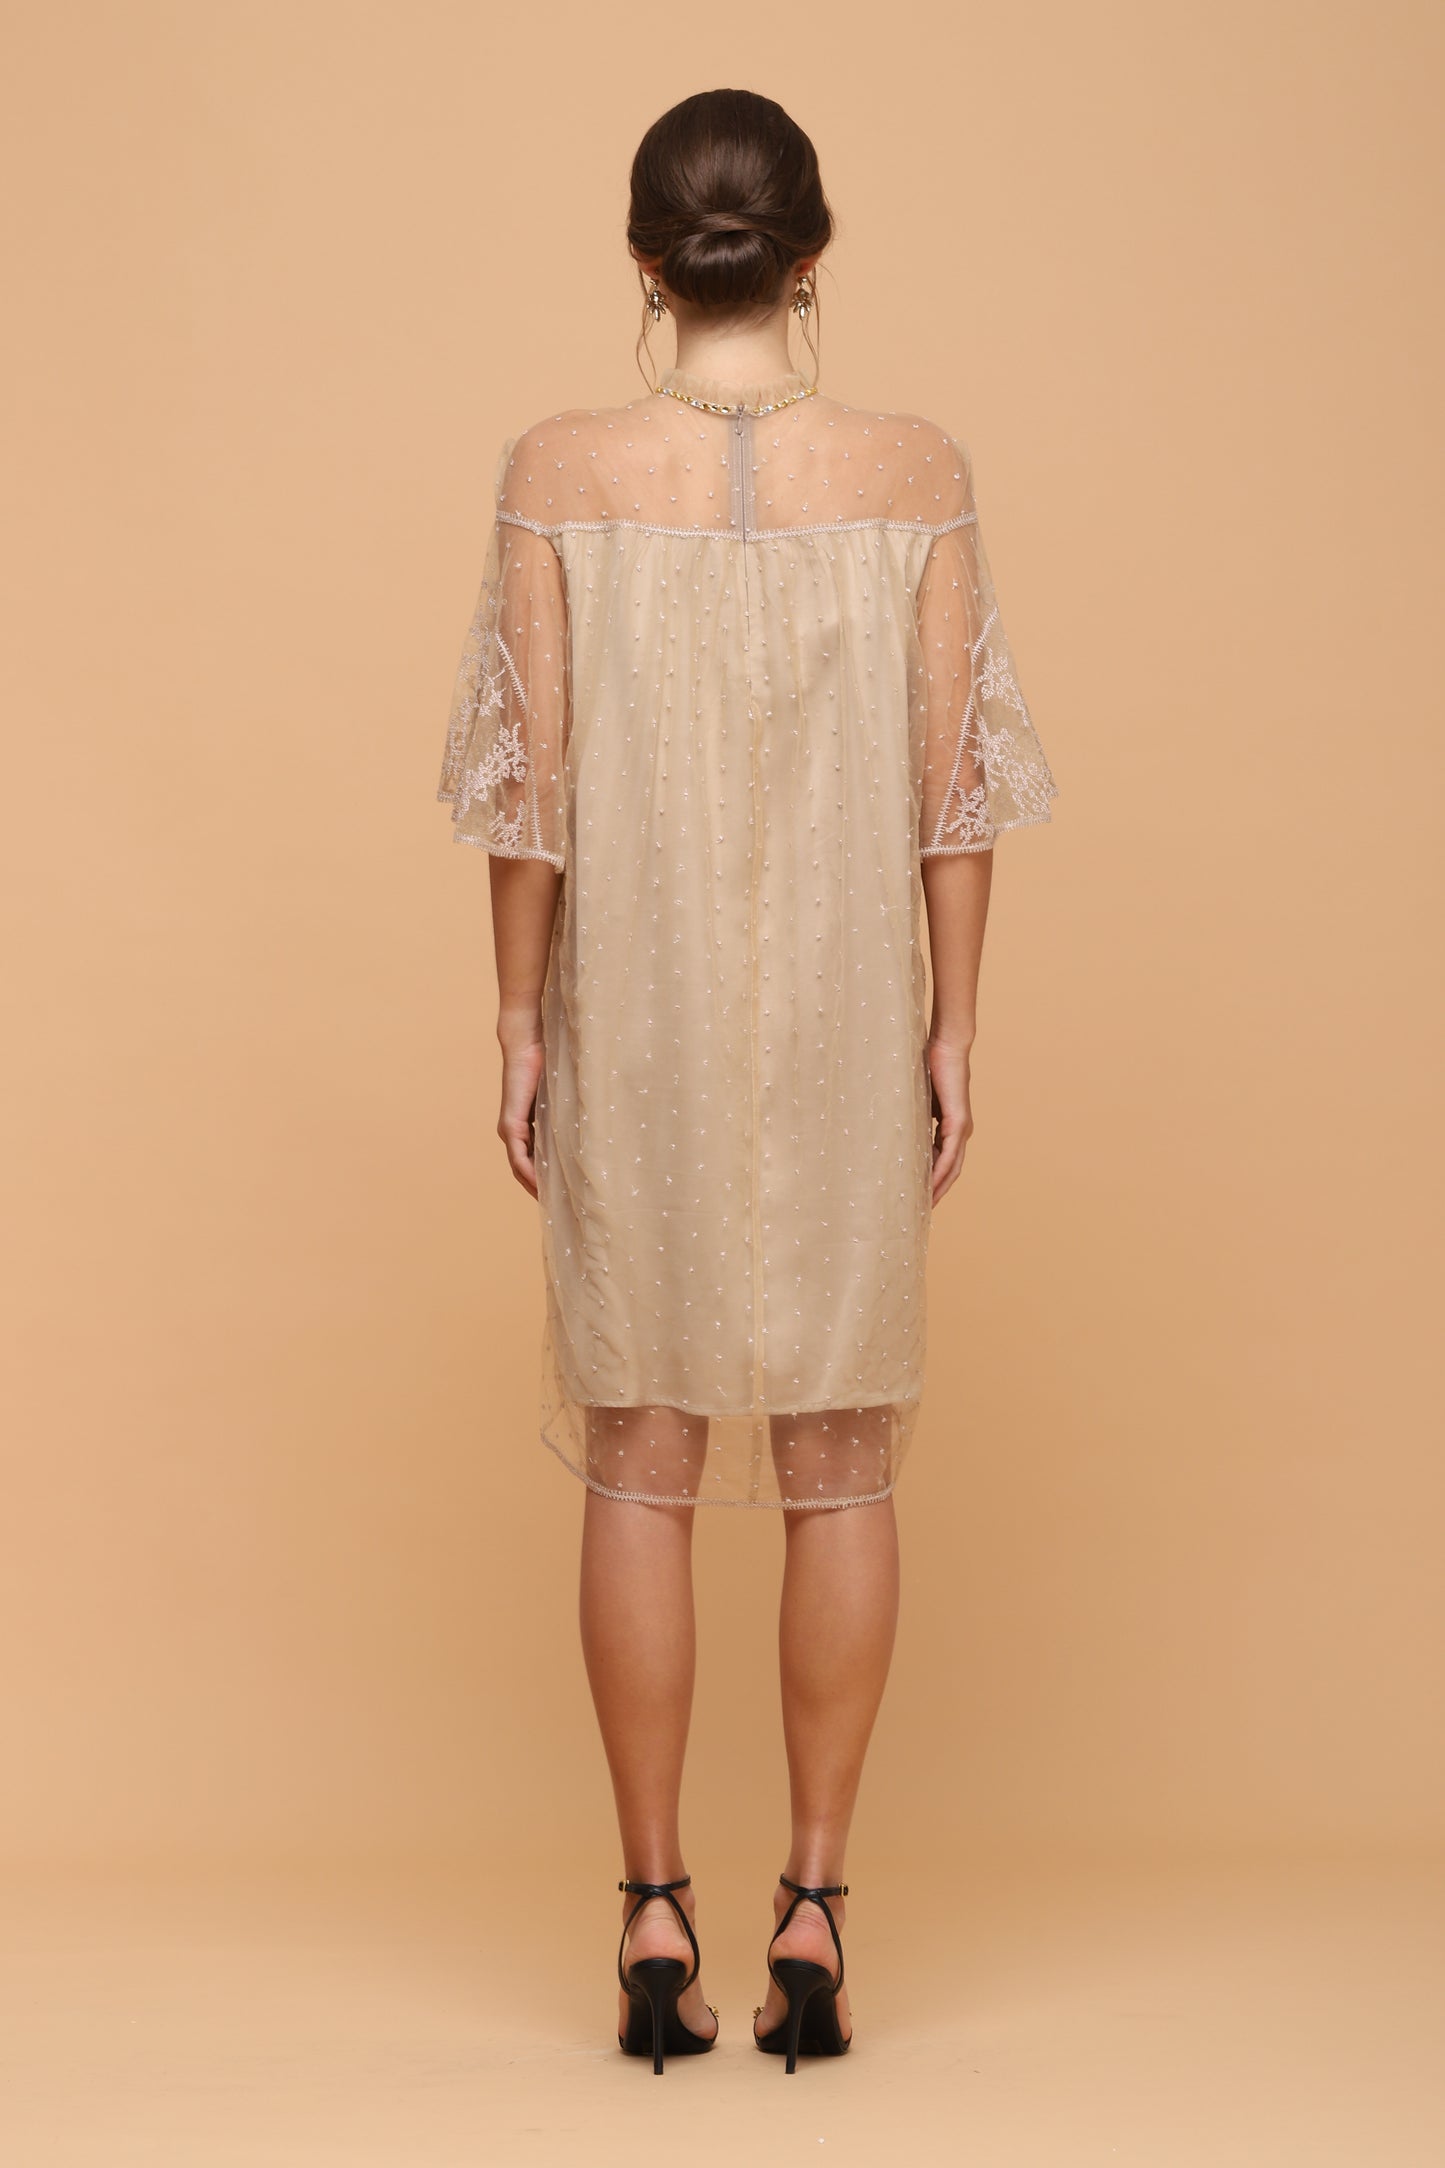 Classy - Beige Soft Ethnic Lace Dress